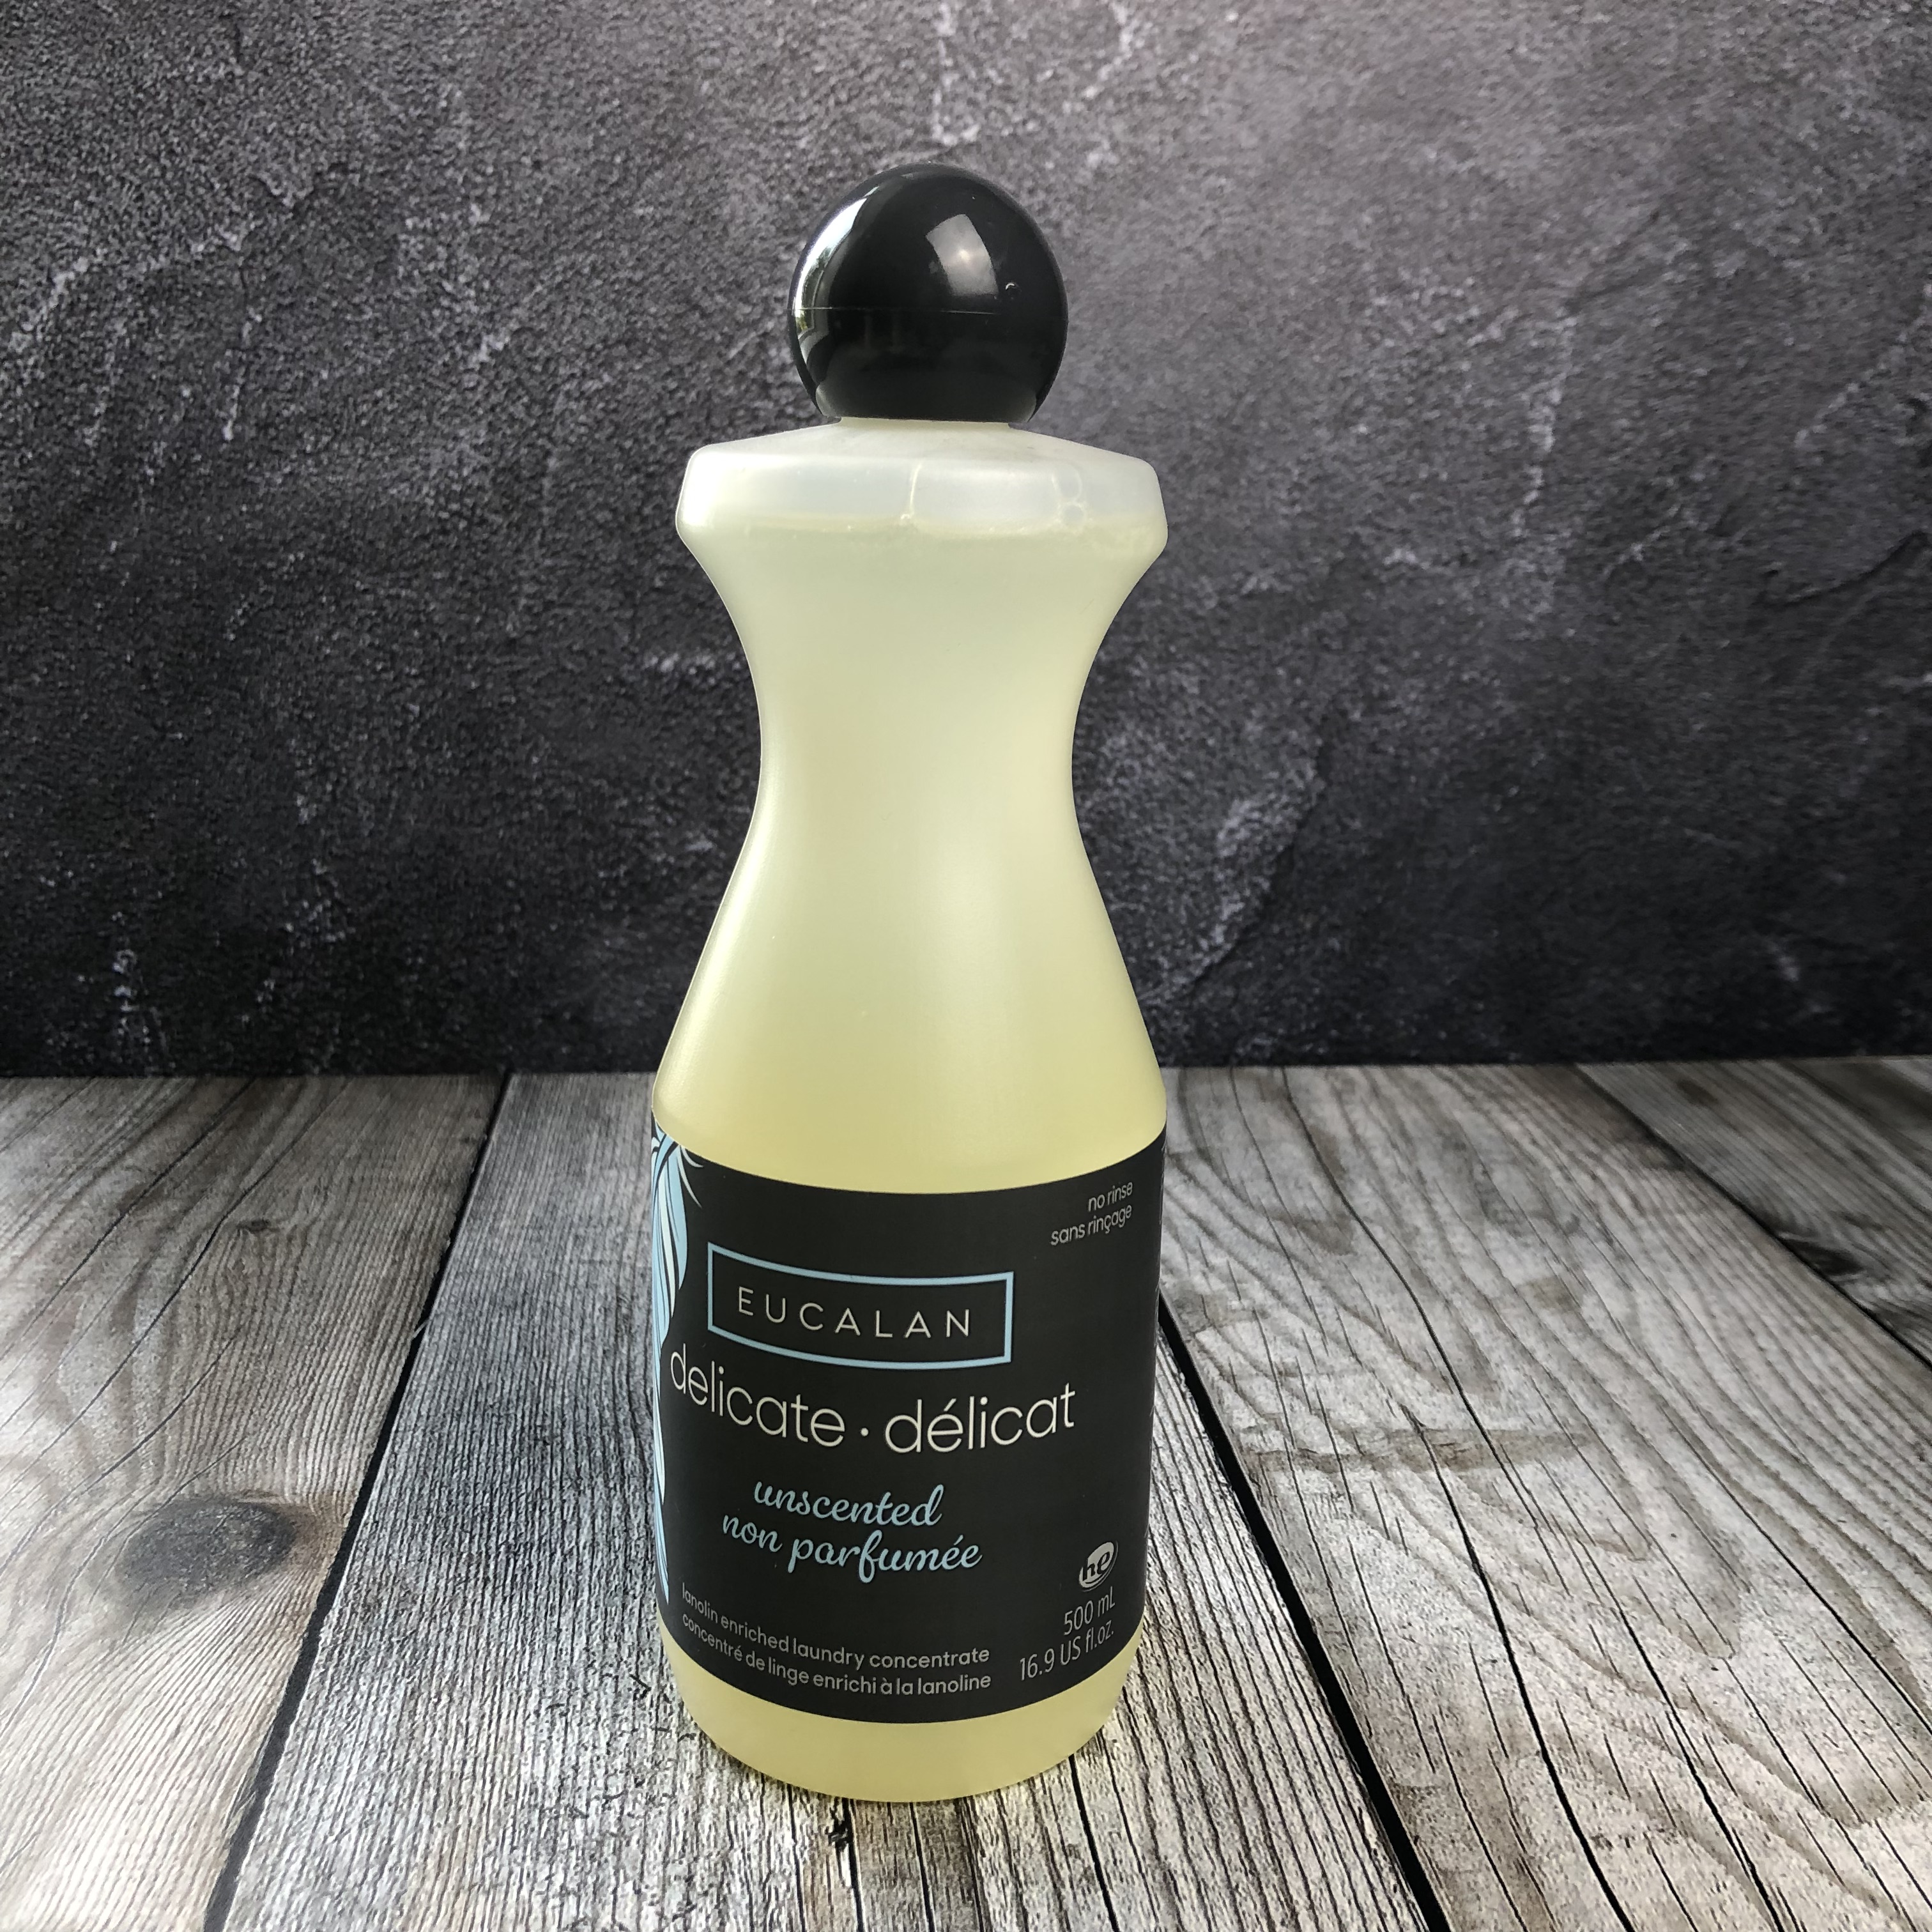 Eucalan Uldvask delicate unscrented non perfumé 500 ml. (Neutral) Uldvask, Håndcrem, Mølkugler - Tante